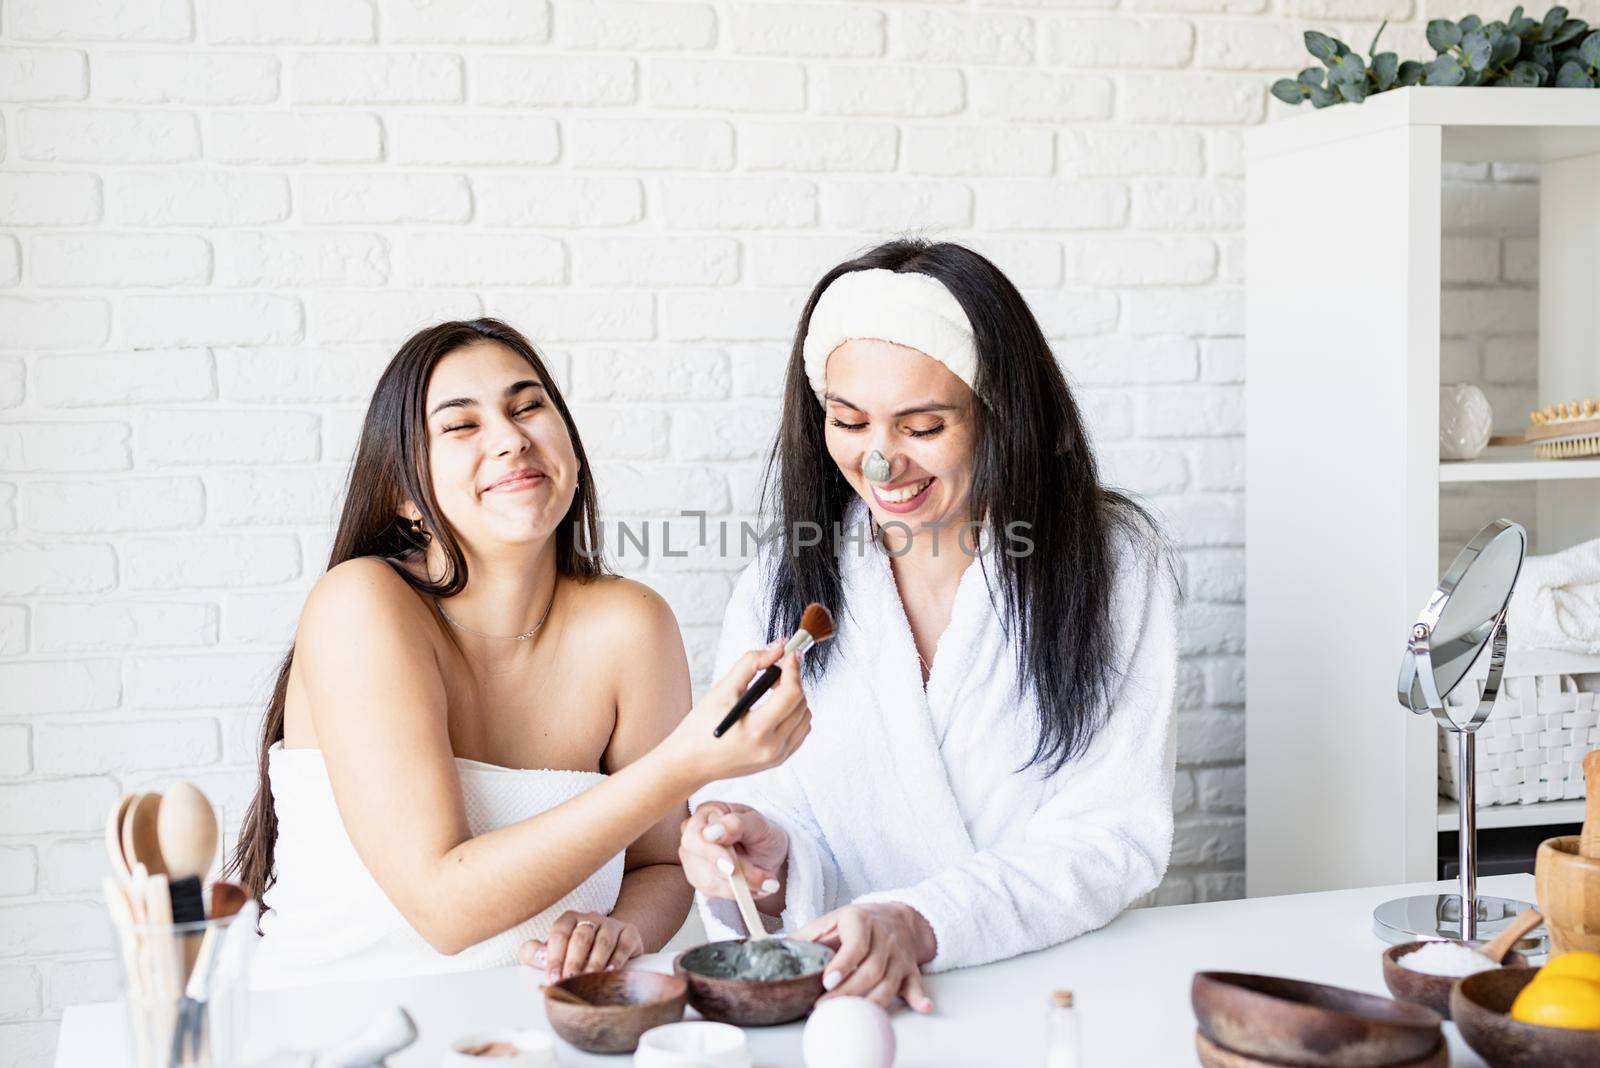 Spa and wellness concept. Self care. two beautiful women making facial mask having fun